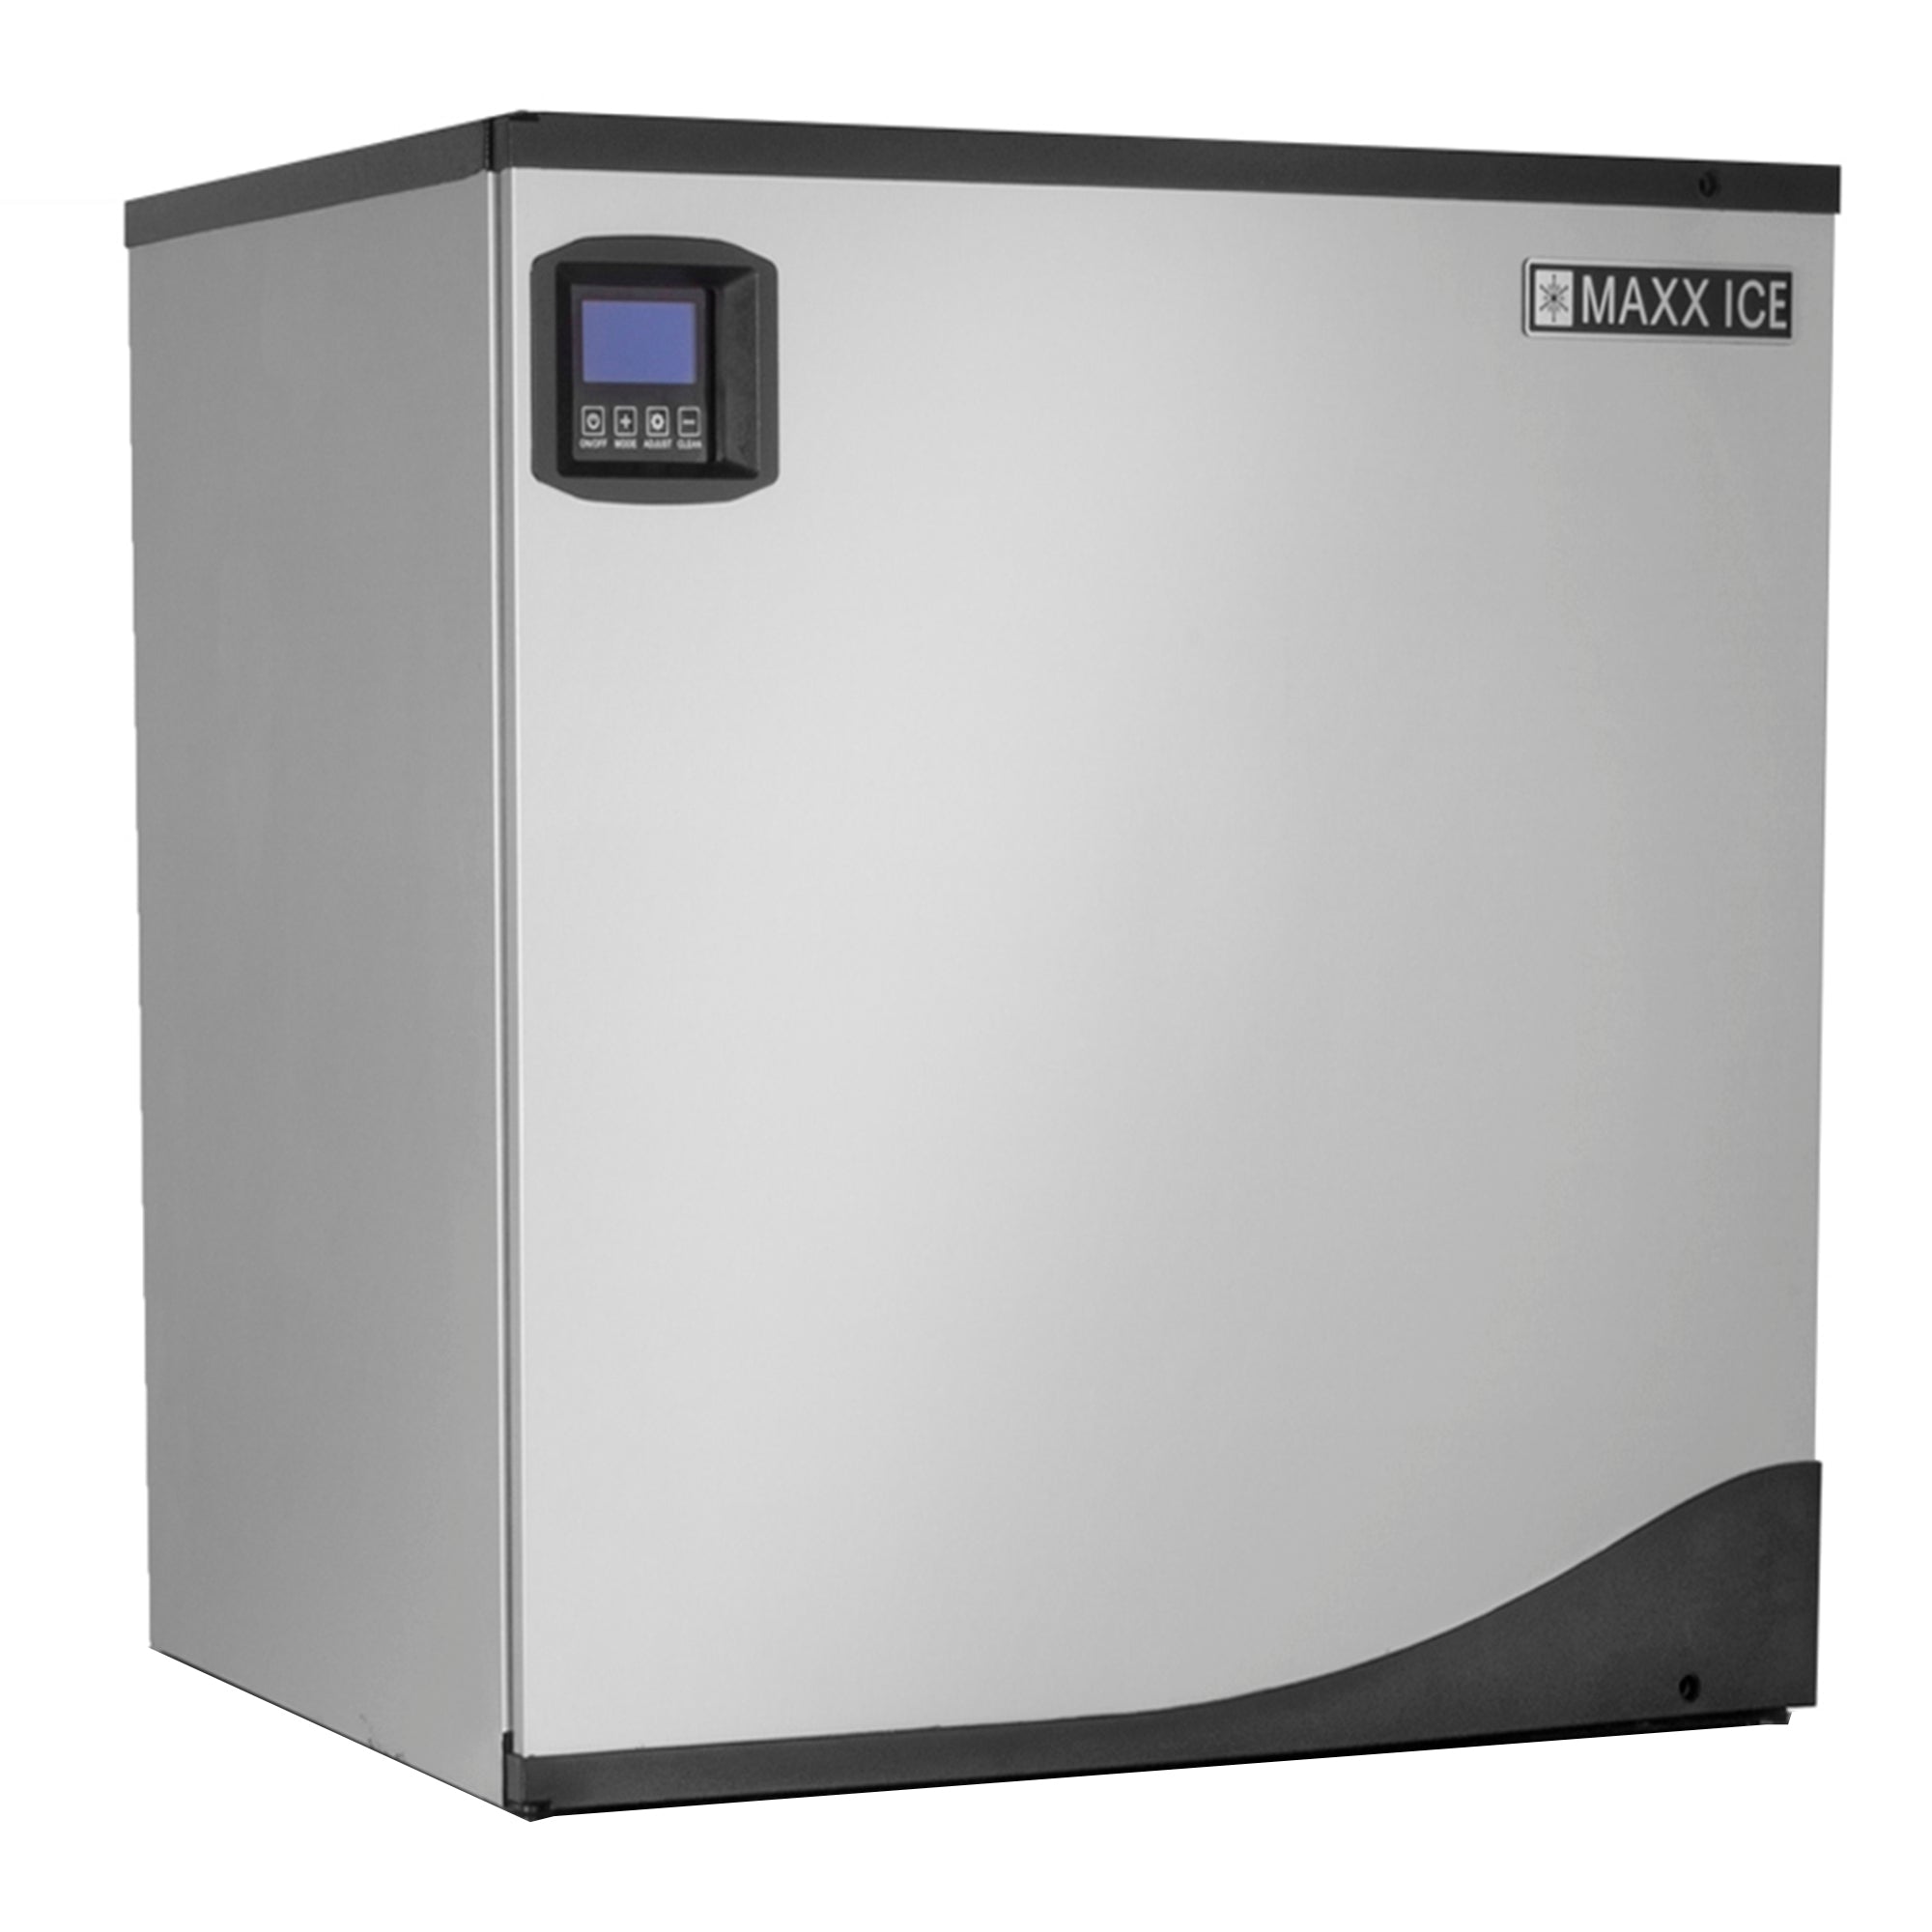 Maxx Ice Modular Ice Machine, 30W, 1000 lbs, in Stainless Steel